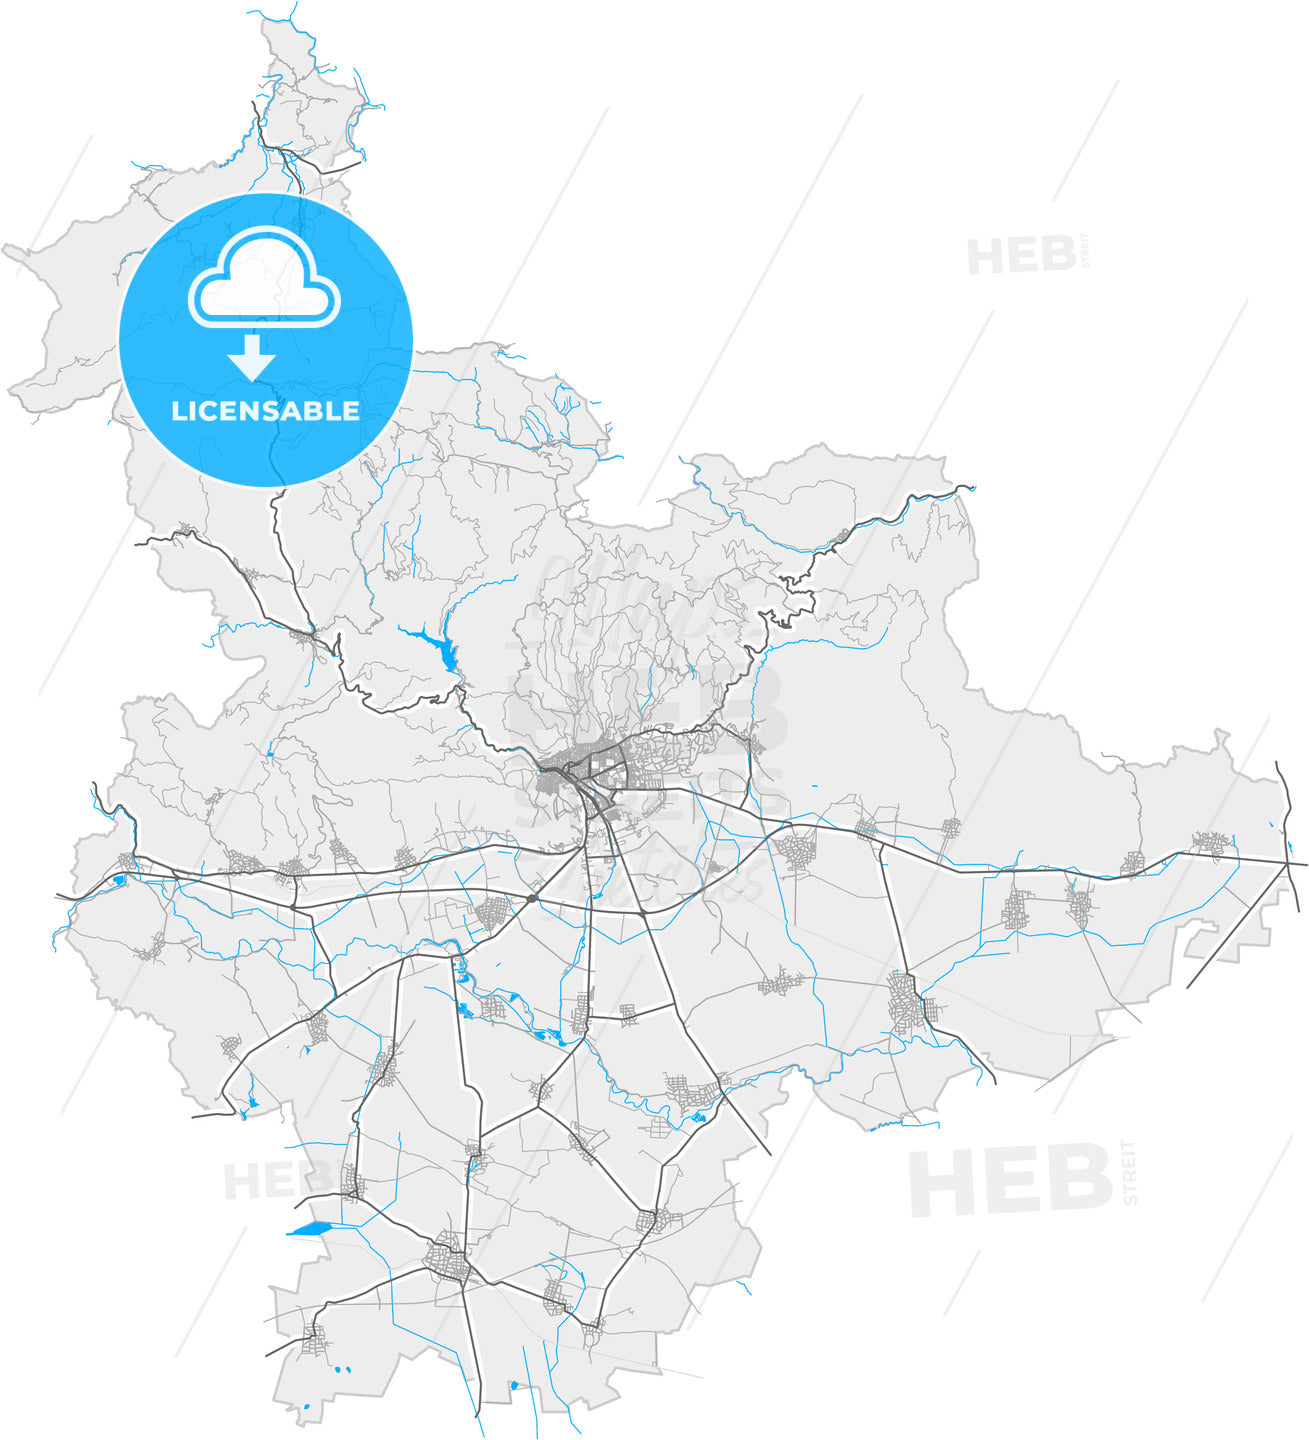 Сливен, Bulgaria, high quality vector map